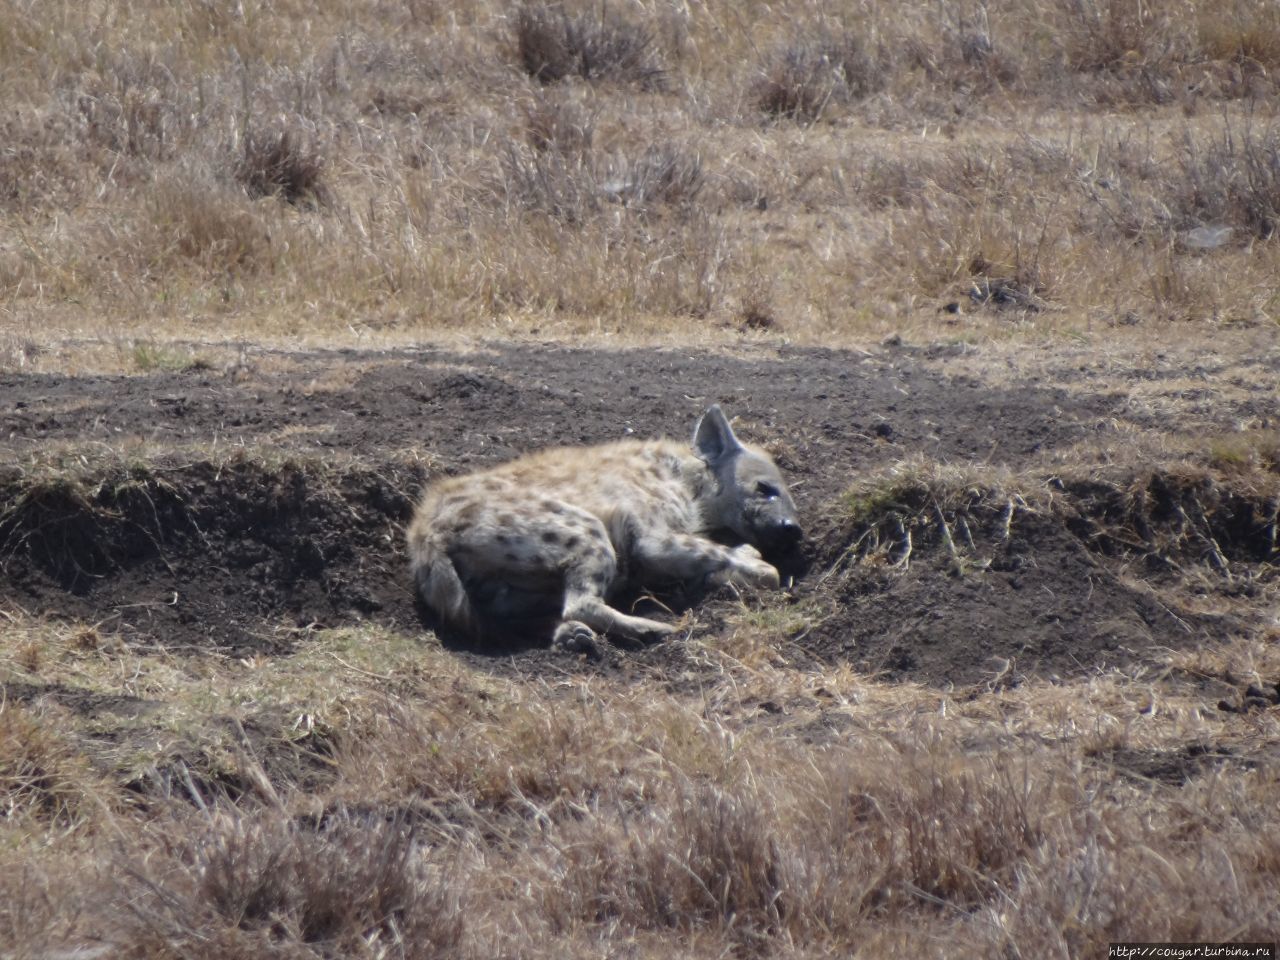 Гиена, самец, судя по всему. Нгоронгоро (заповедник в кратере вулкана), Танзания